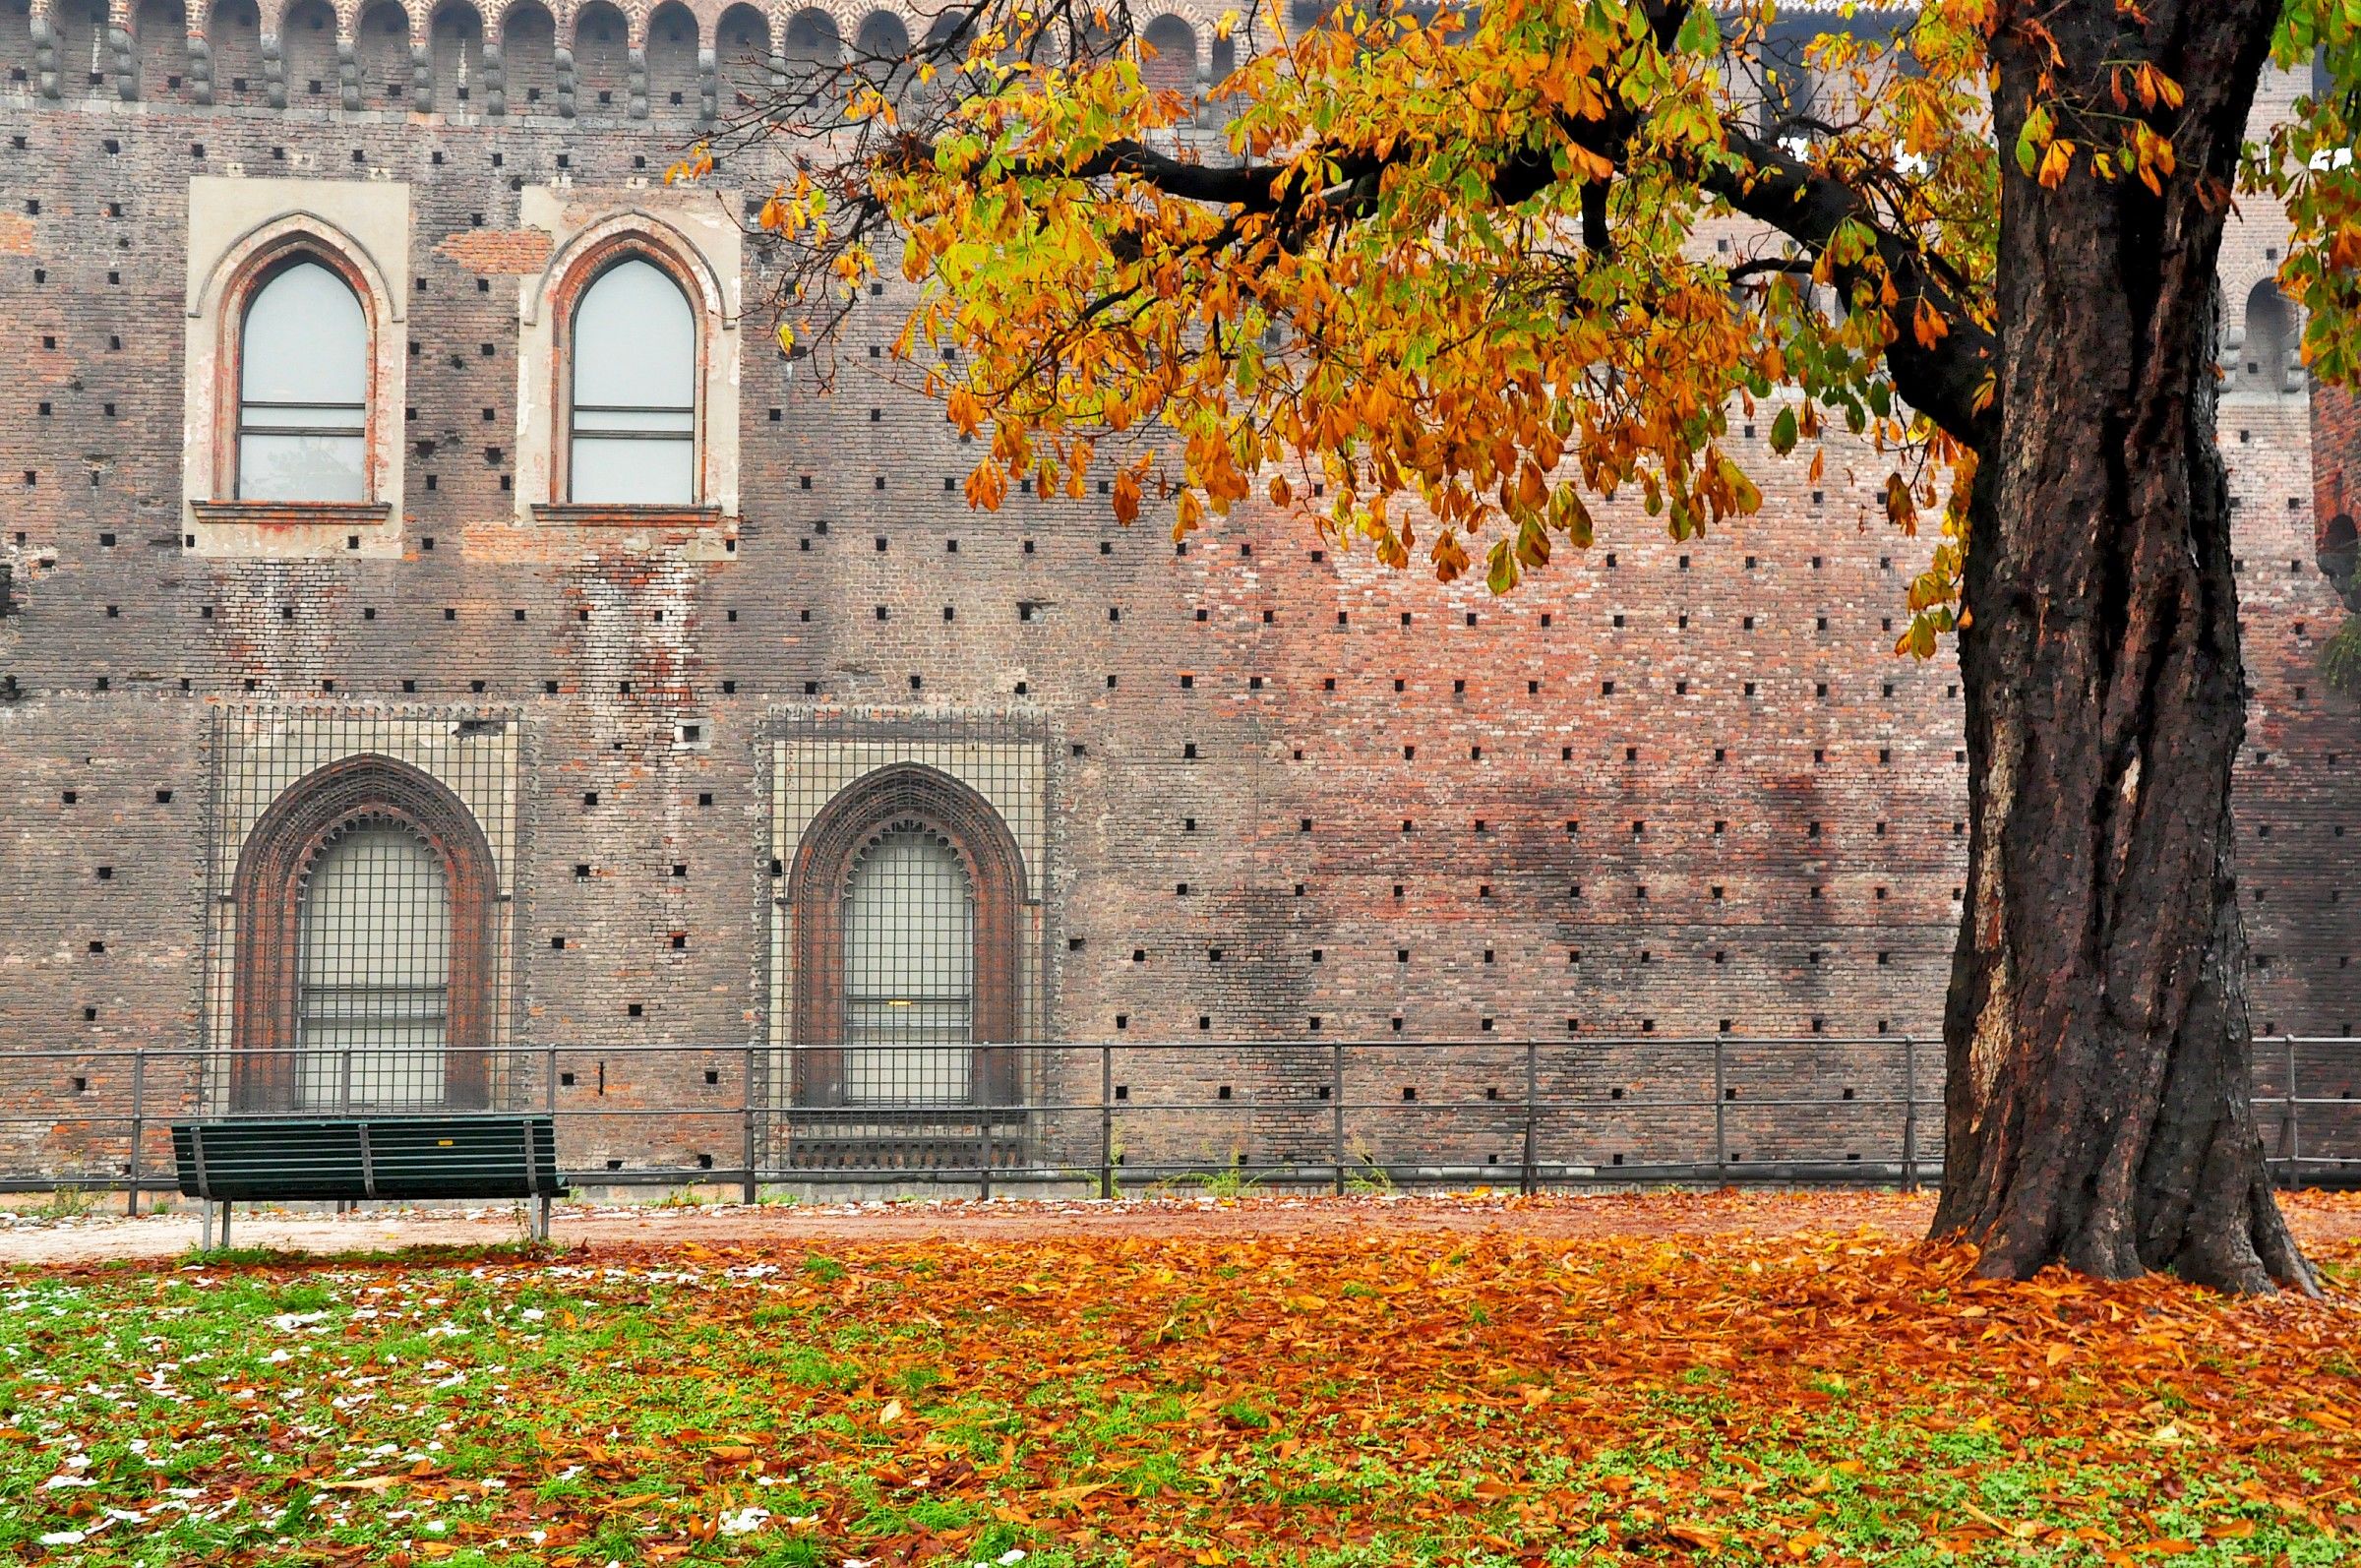 Autumn in Milan...